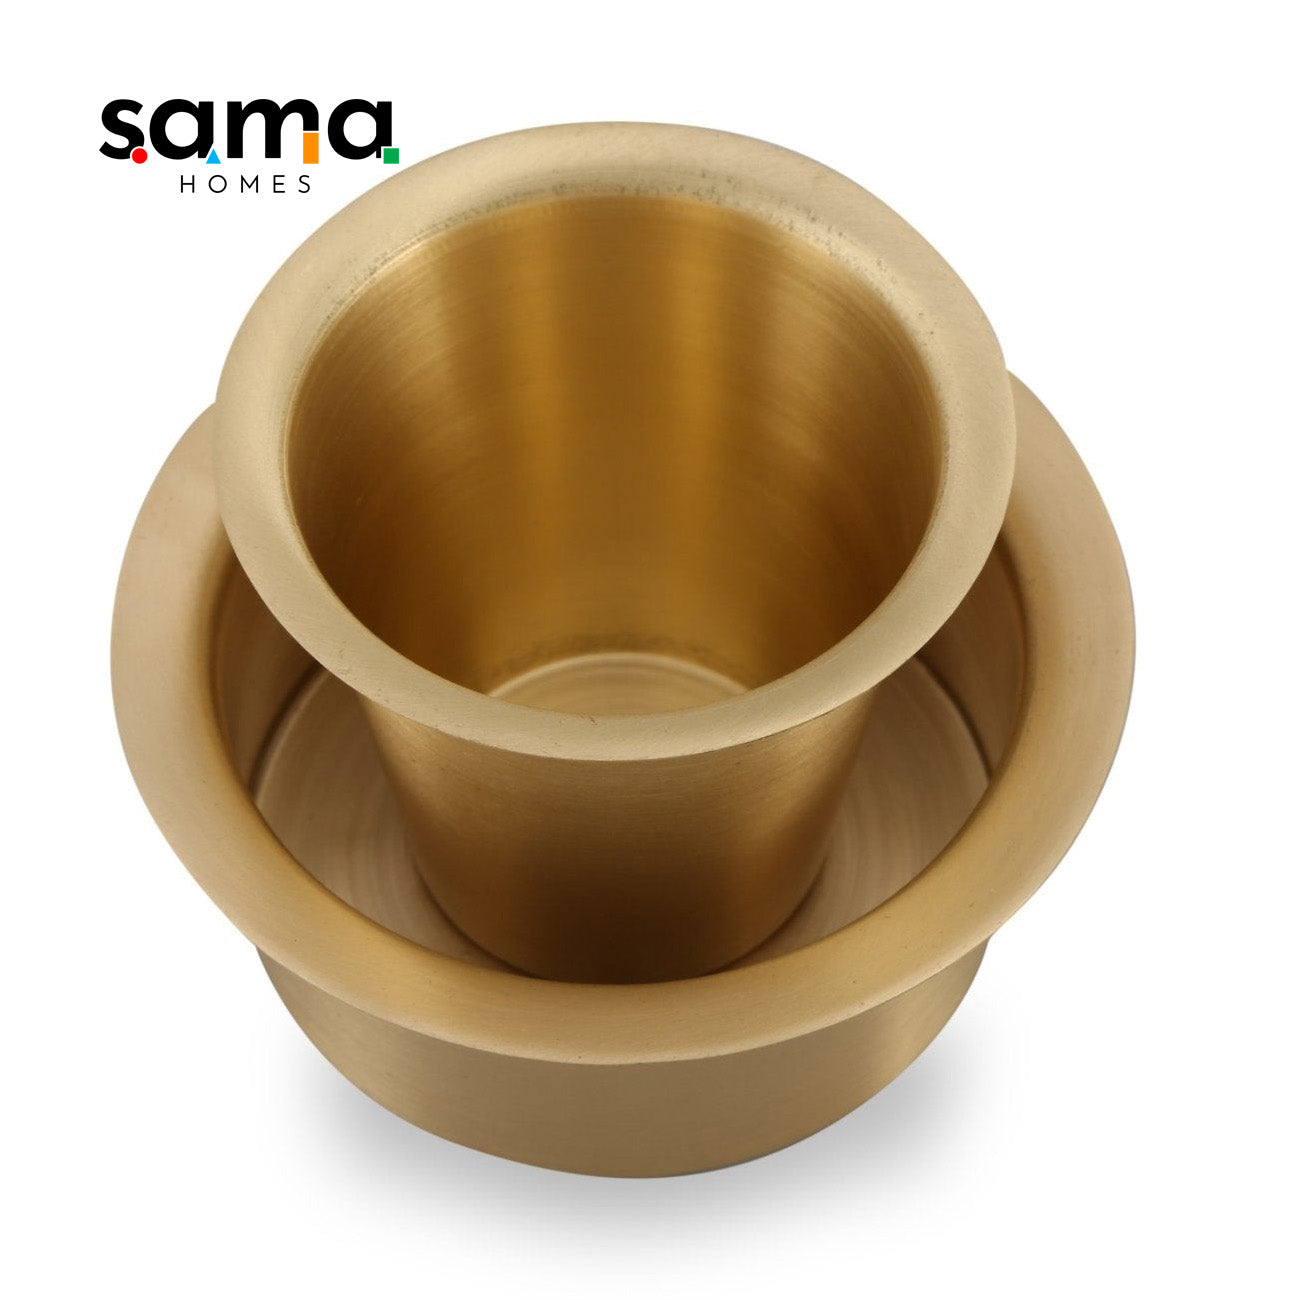 SAMA Homes - brass coffee dabra matte finish